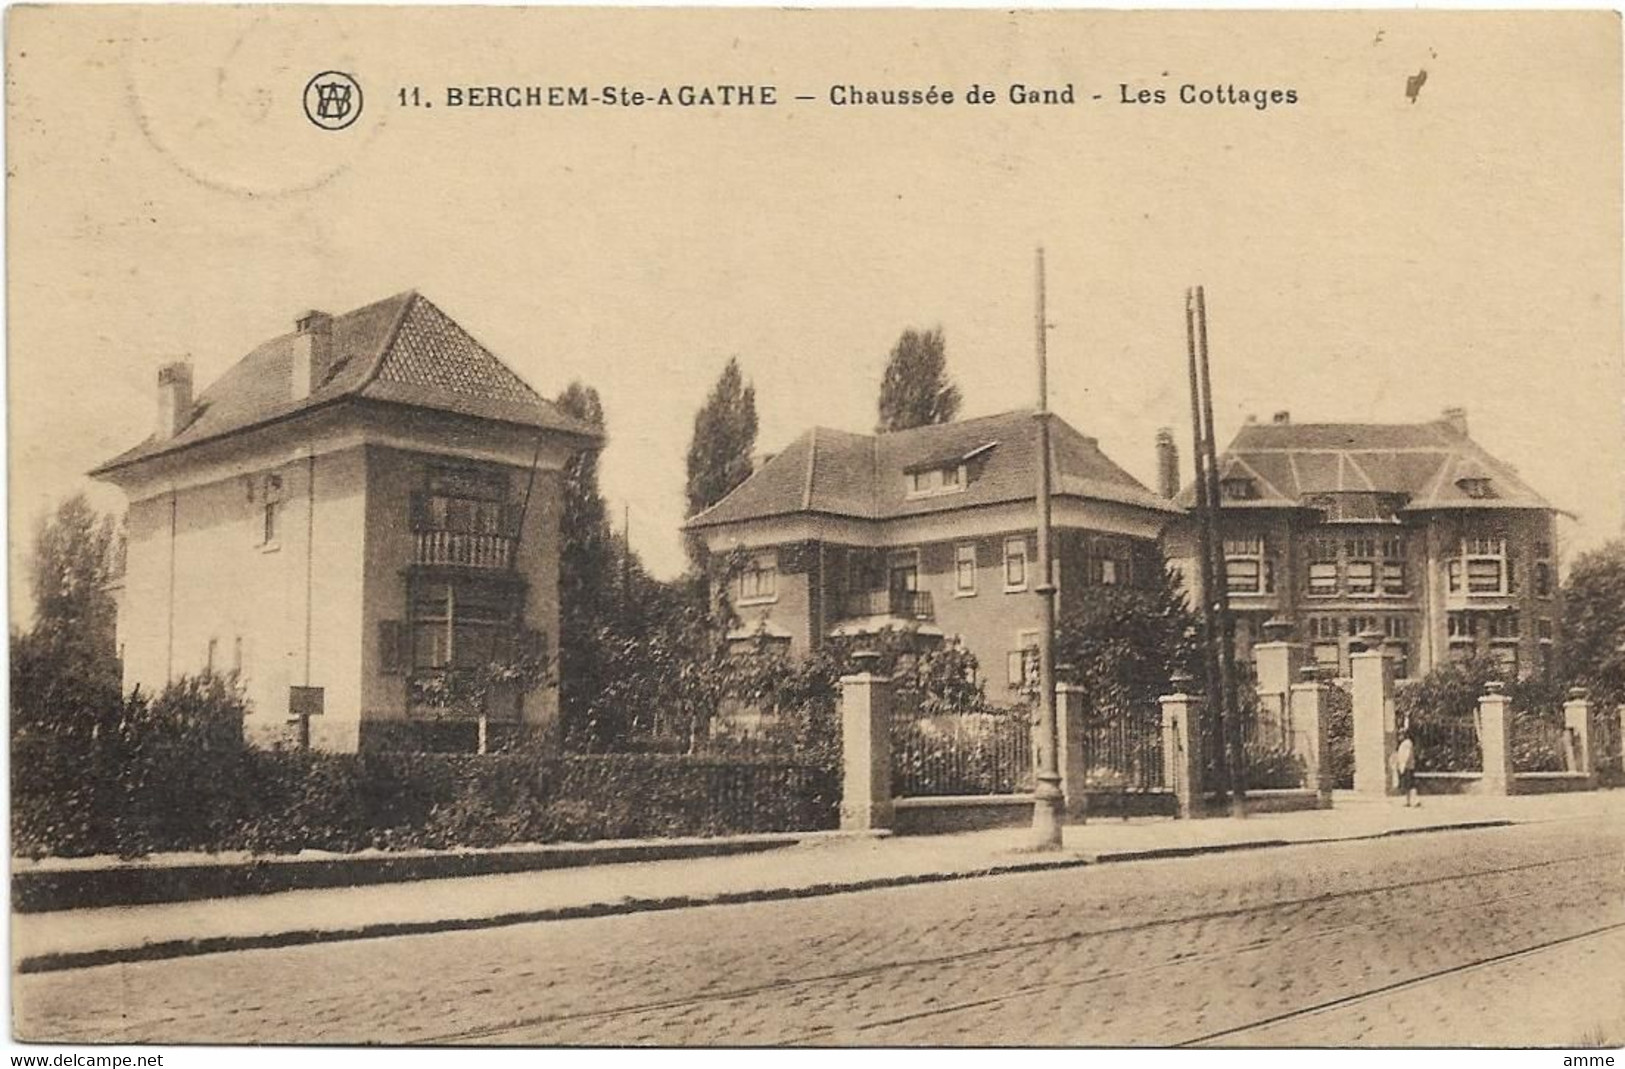 Sint-Agatha-Berchem   *   Chaussée De Gand - Les Cottages  (WB,11) - St-Agatha-Berchem - Berchem-Ste-Agathe